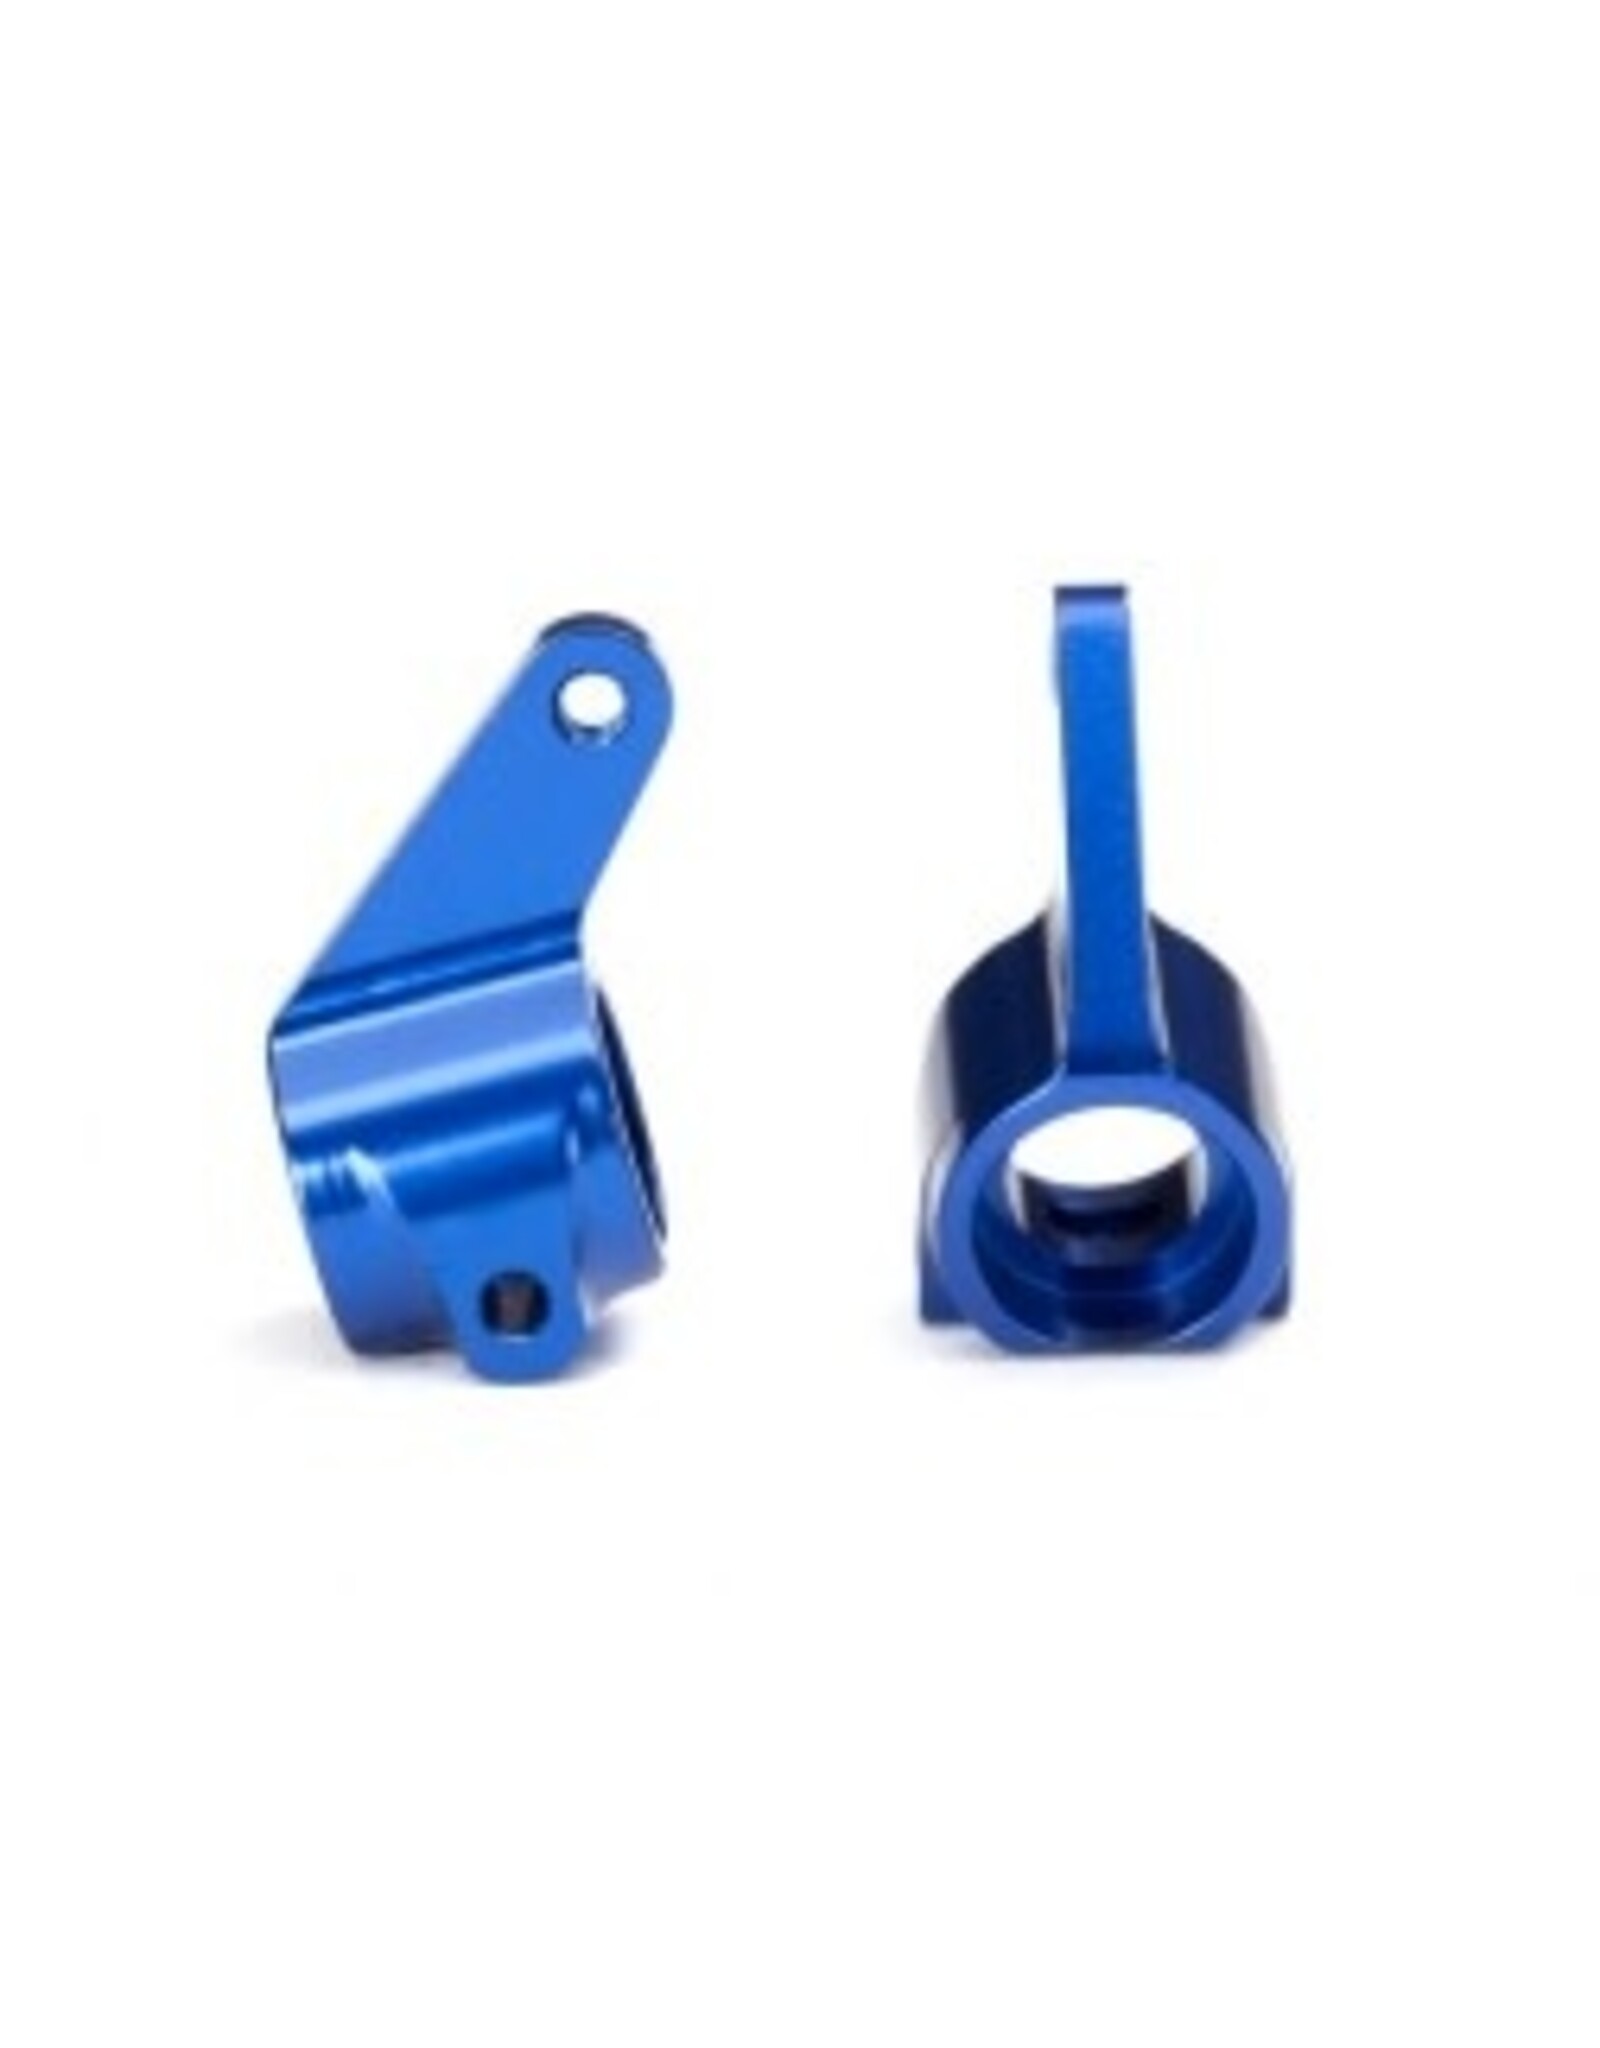 Traxxas Steering blocks, Rustler®/Stampede®/Bandit (2), 6061-T6 aluminum (blue-anodized)/ 5x11mm ball bearings (4)